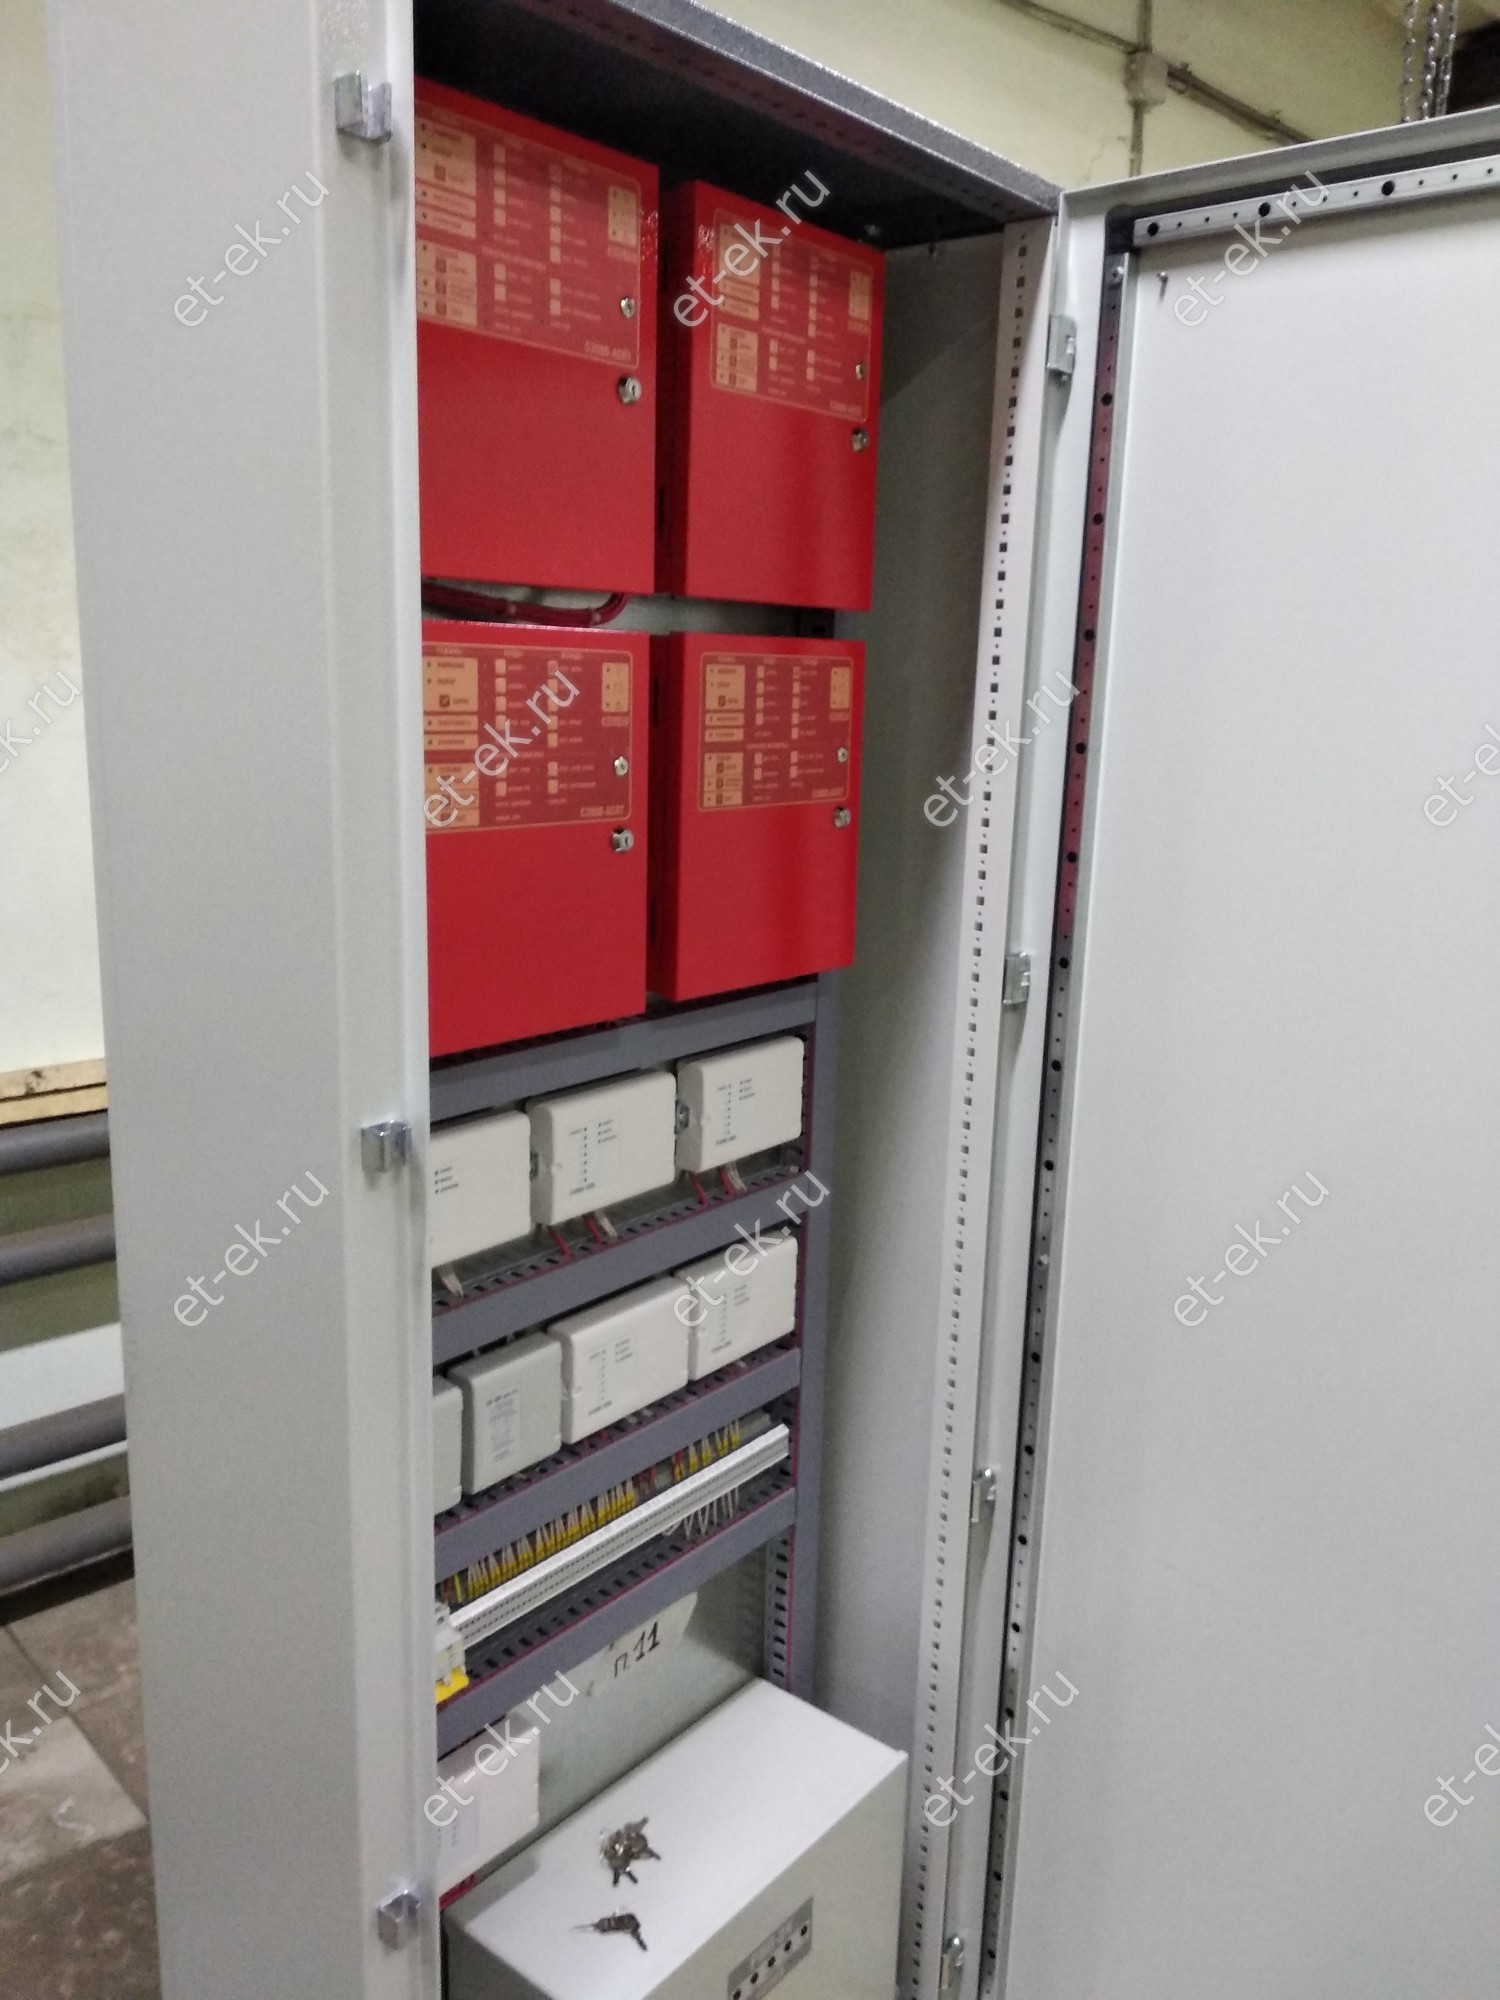 Шпс шкаф для установки приборов системы орион на din рейки